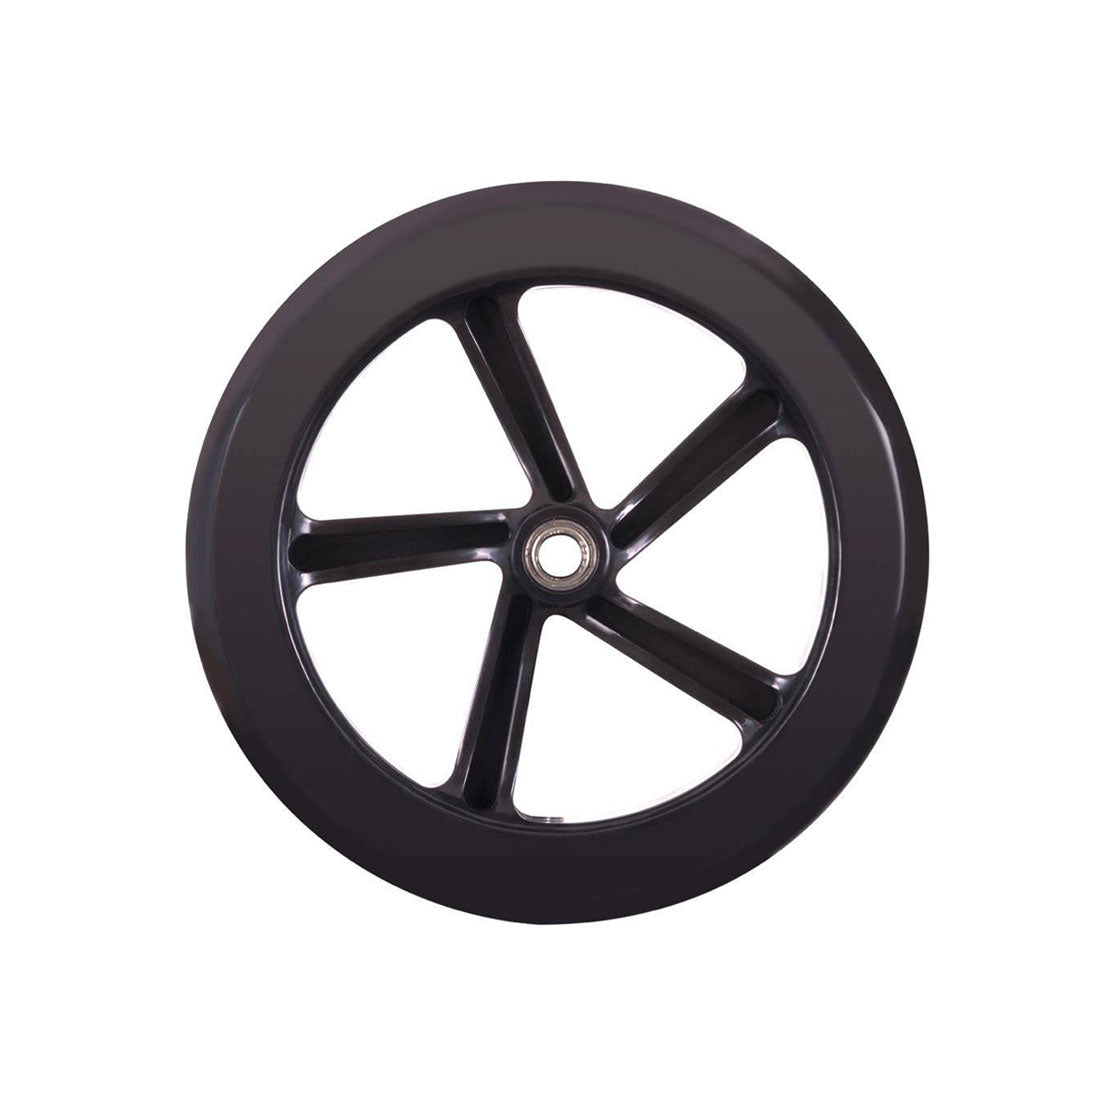 Globber 180mm 82a Wheel - Black Scooter Wheels